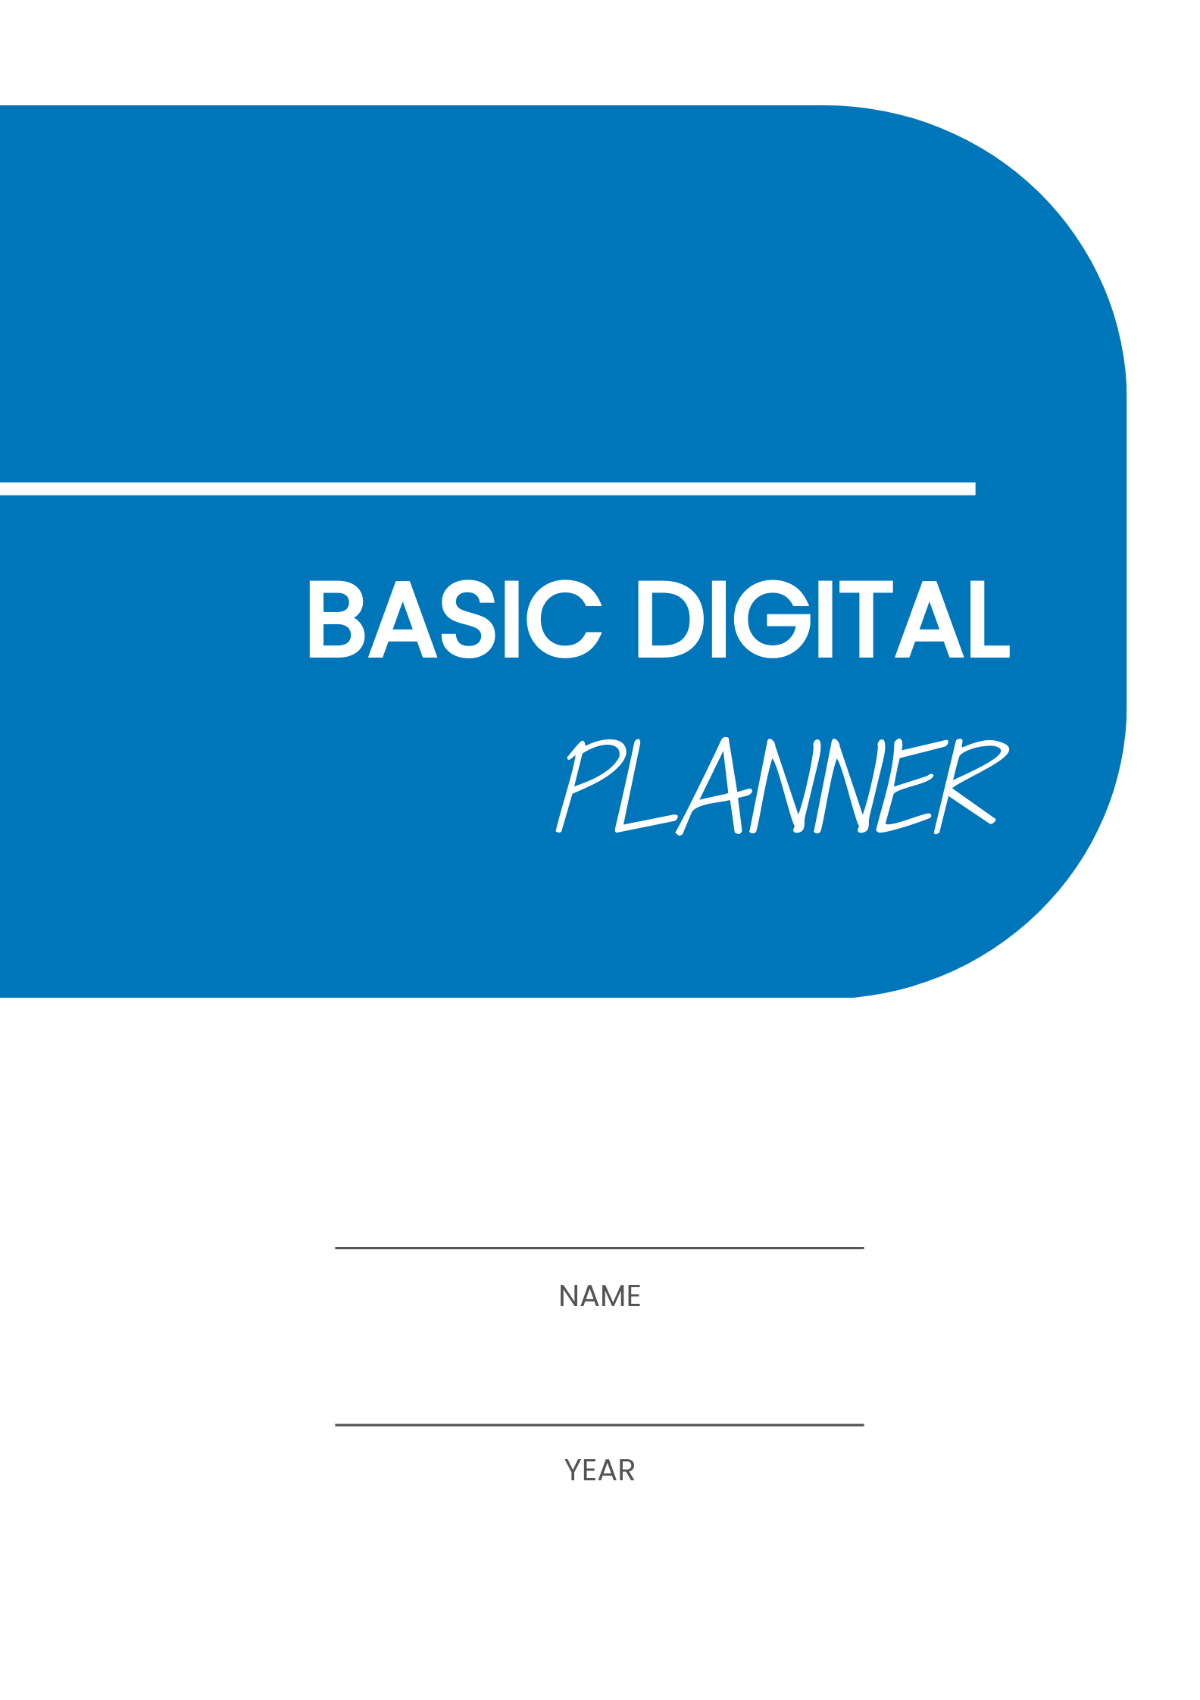 Basic Digital Planner Template